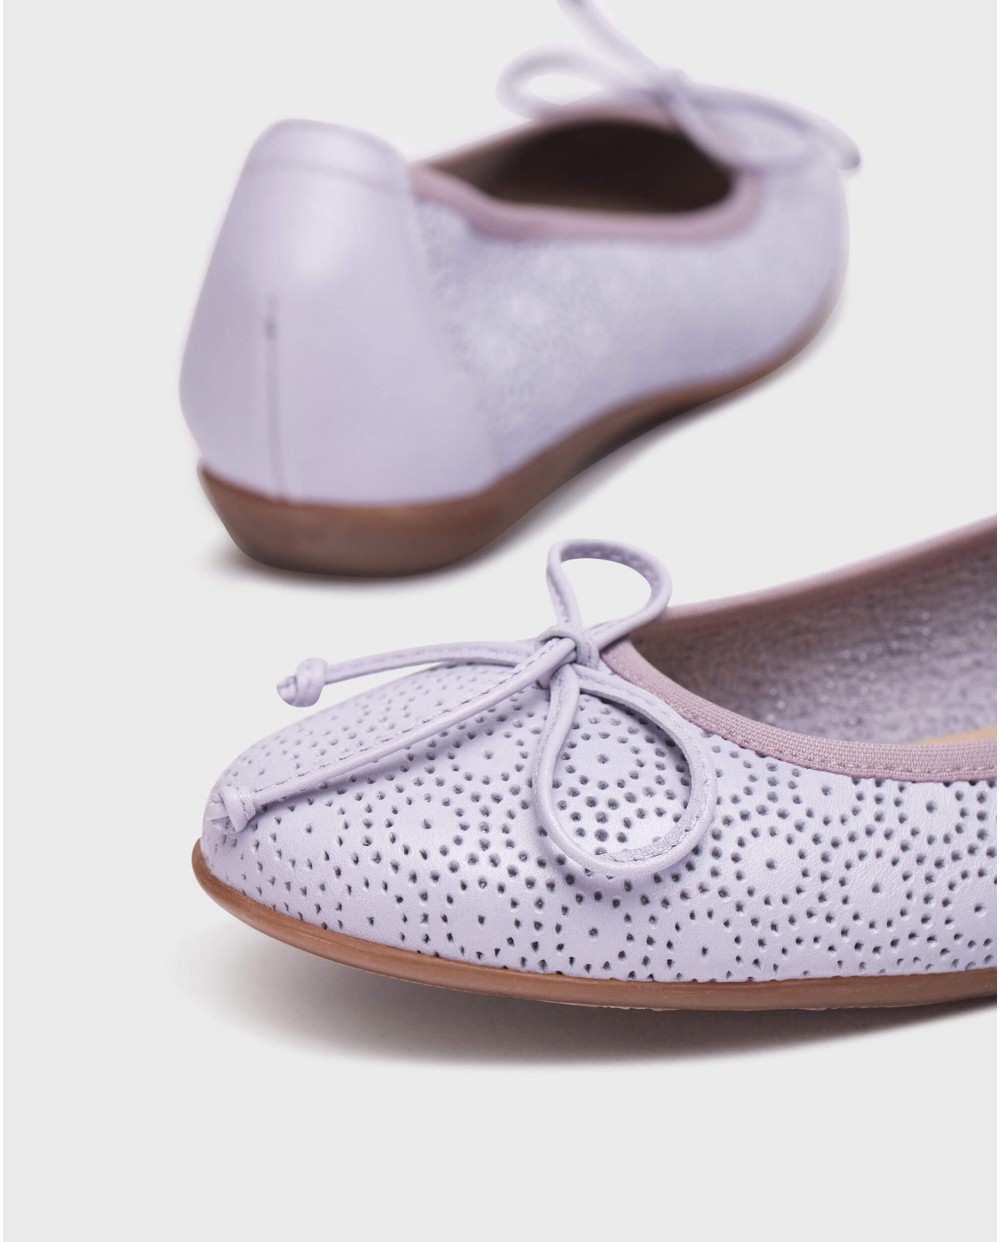 Wonders-Flat Shoes-Lavender Lace Ballerina